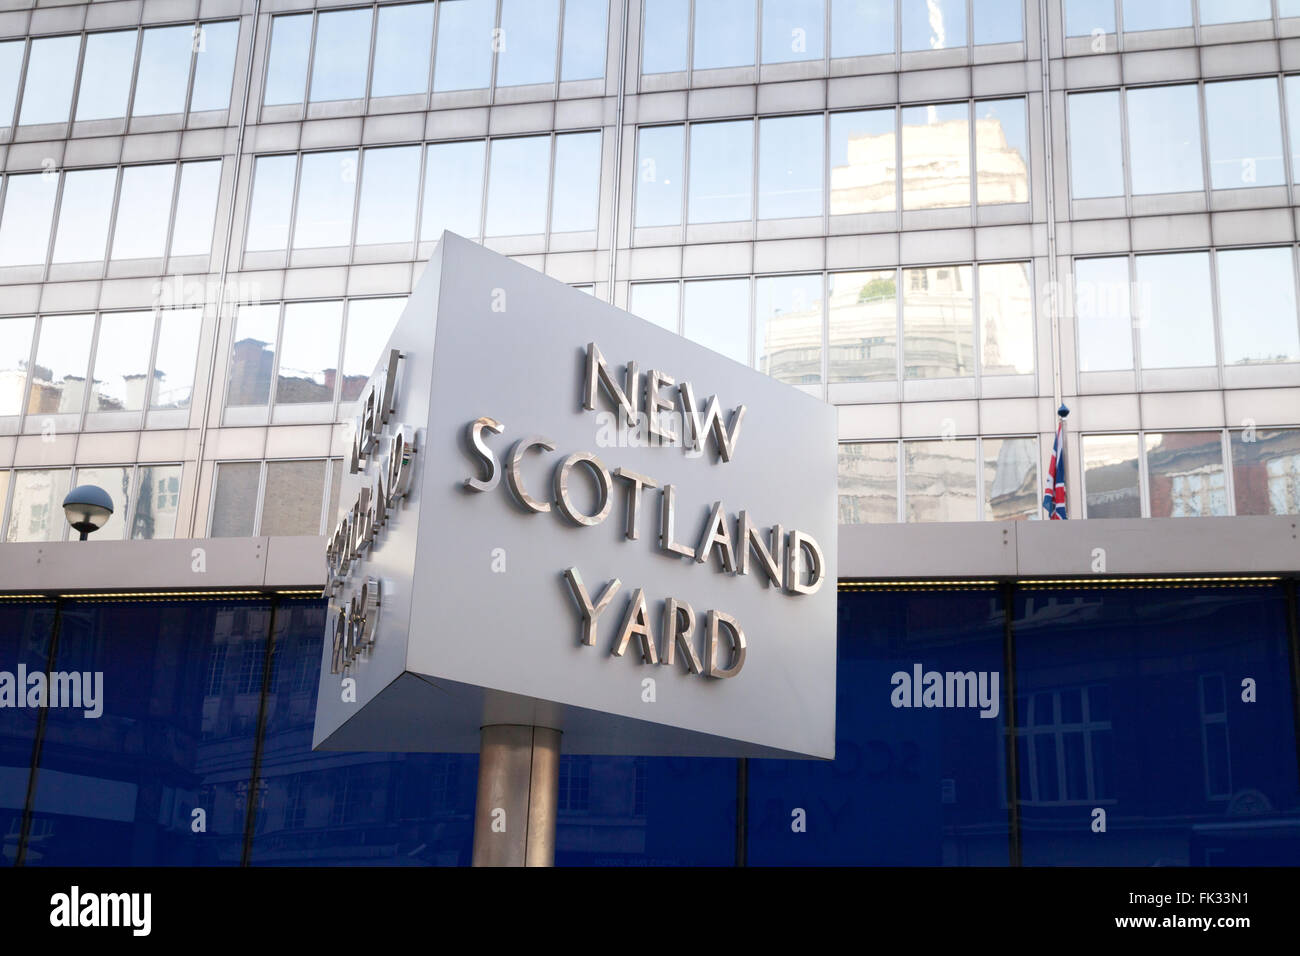 New Scotland Yard sign, Close up, Broadway, London, England, UK Banque D'Images